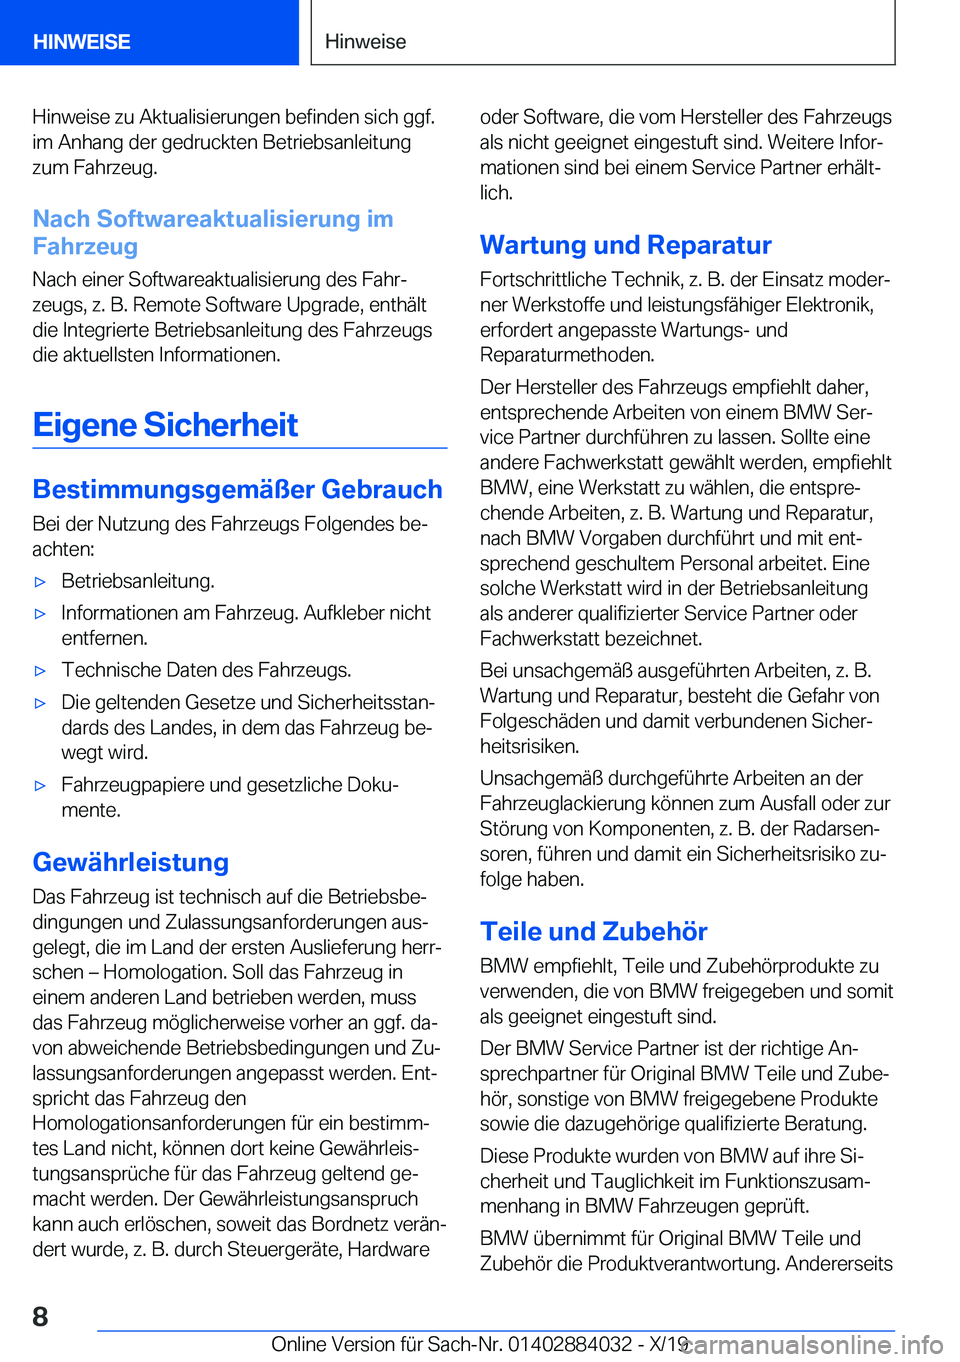 BMW 7 SERIES 2020  Betriebsanleitungen (in German) �H�i�n�w�e�i�s�e��z�u��A�k�t�u�a�l�i�s�i�e�r�u�n�g�e�n��b�e�f�i�n�d�e�n��s�i�c�h��g�g�f�.�i�m��A�n�h�a�n�g��d�e�r��g�e�d�r�u�c�k�t�e�n��B�e�t�r�i�e�b�s�a�n�l�e�i�t�u�n�g�z�u�m��F�a�h�r�z�e�u